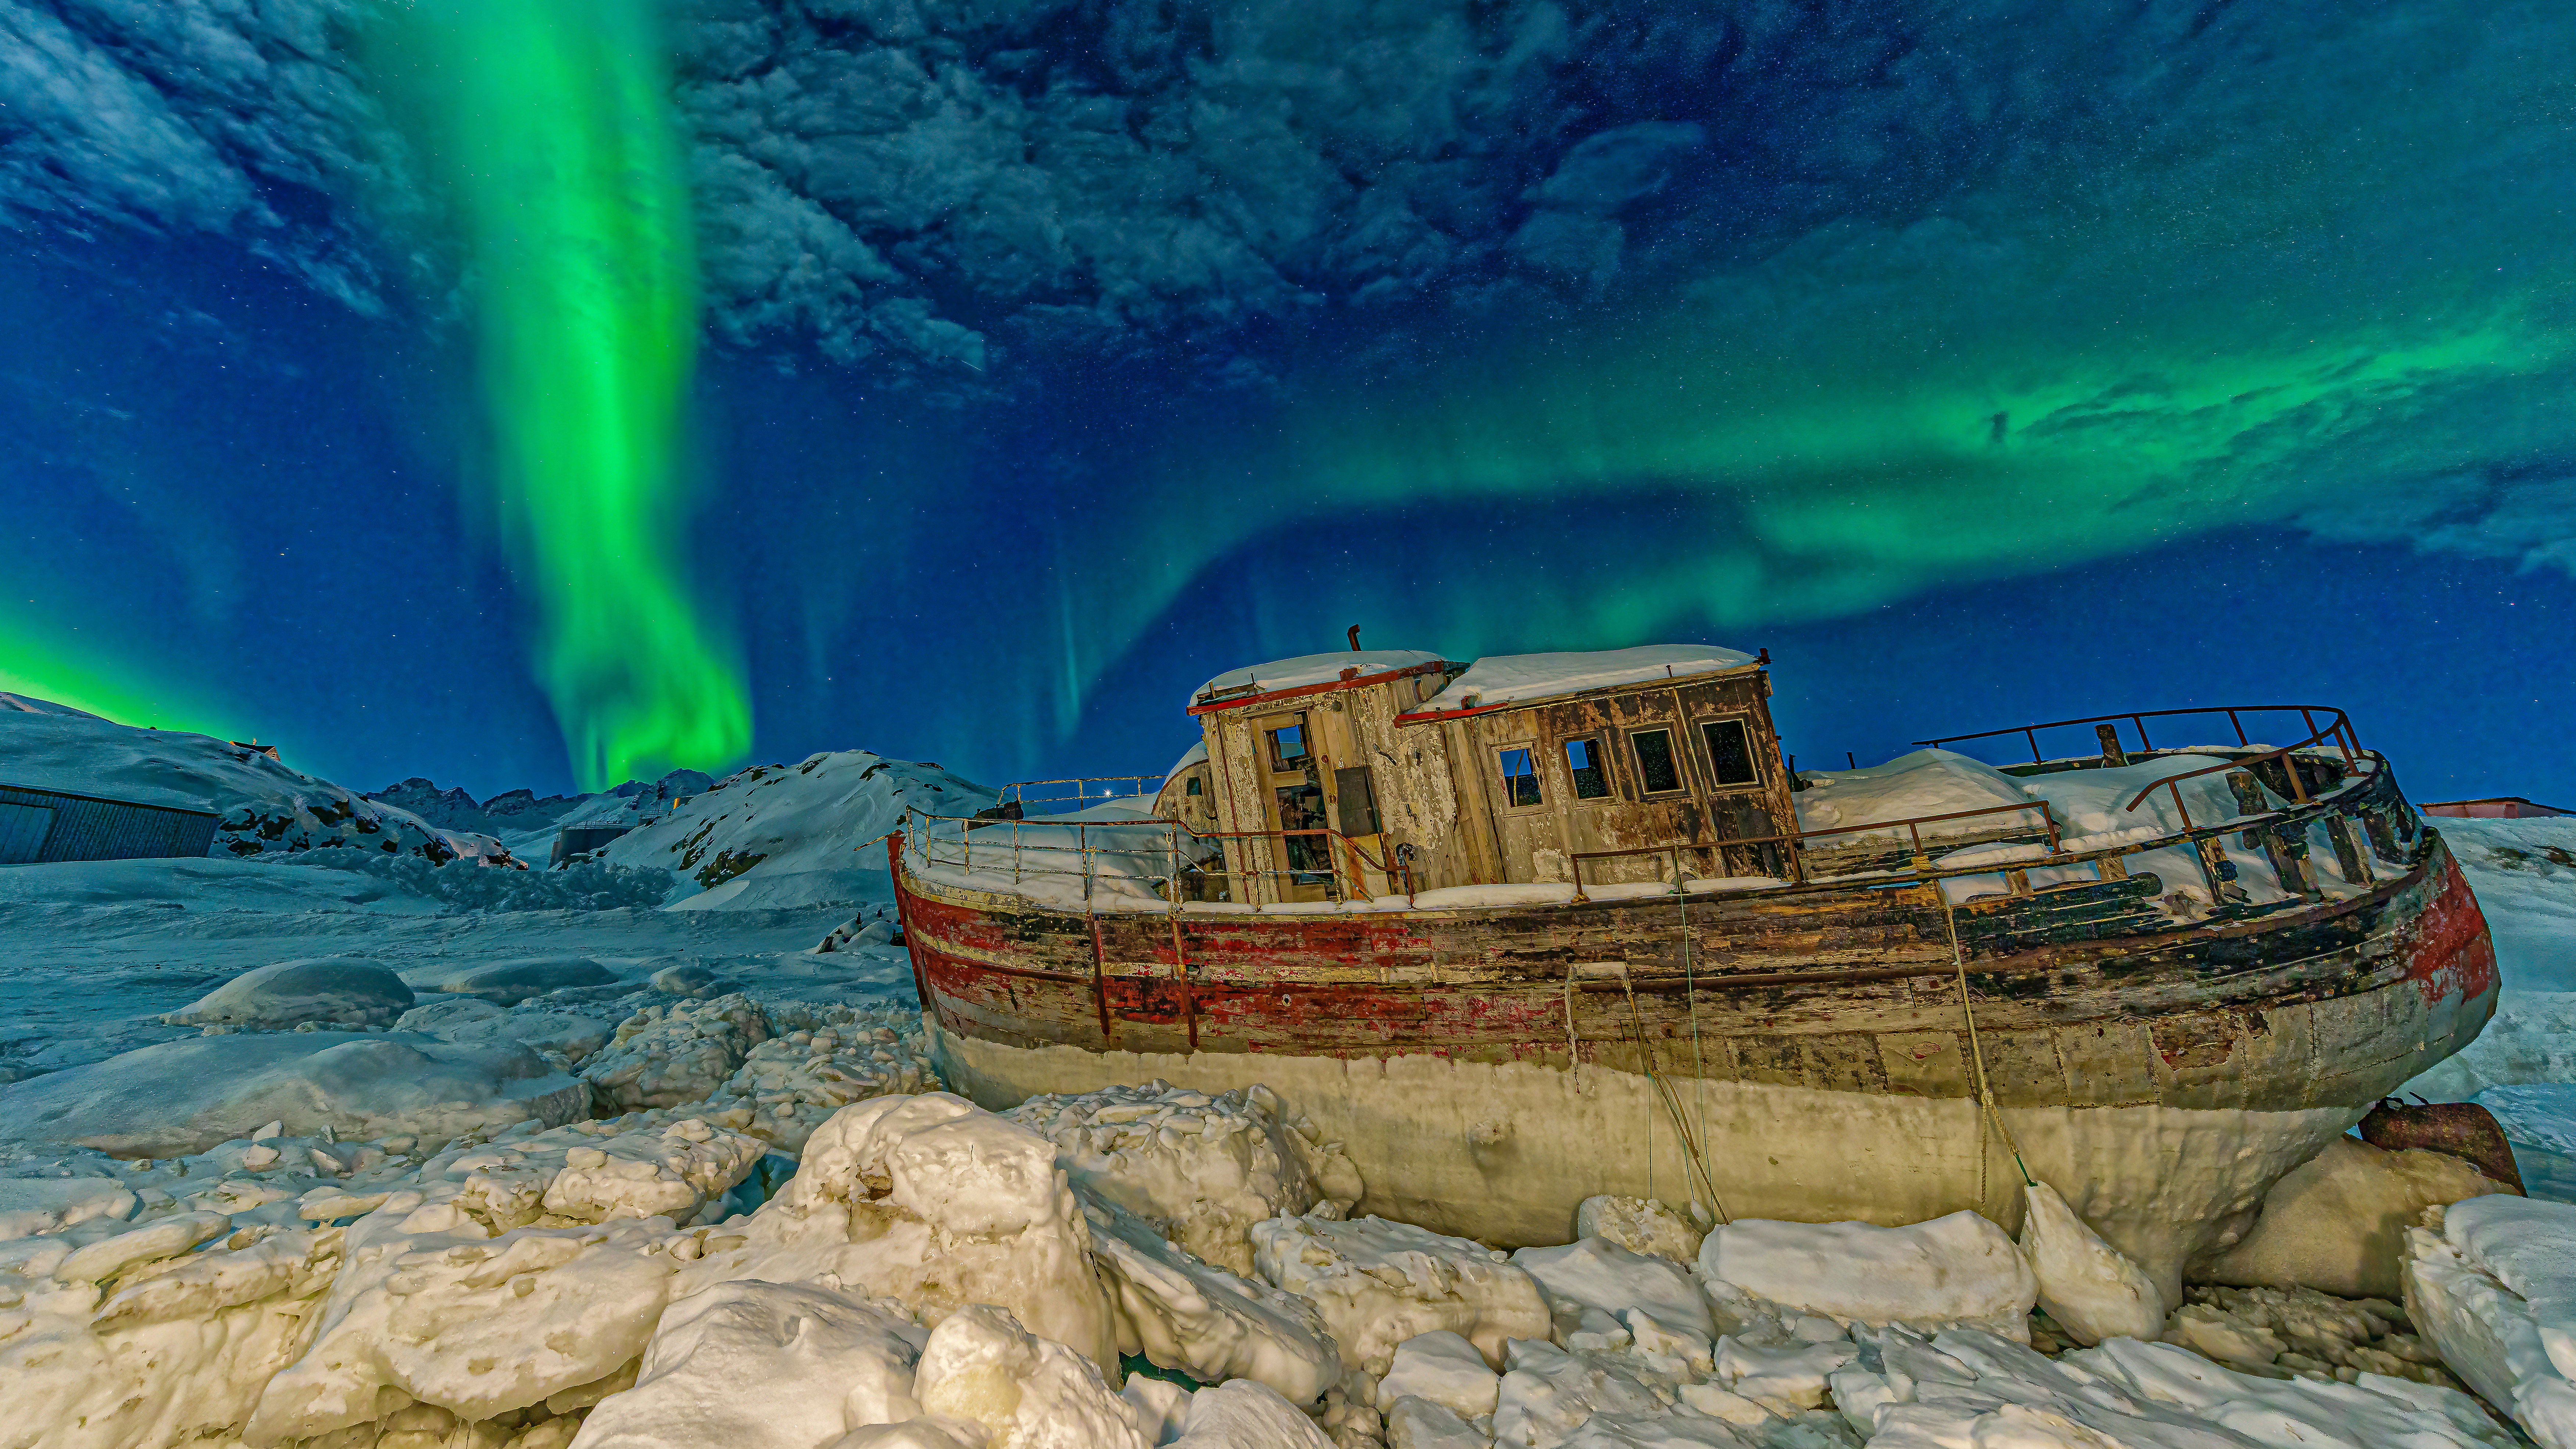 Aurora borealis, Tasiilaq, Greenland by Shane P. White